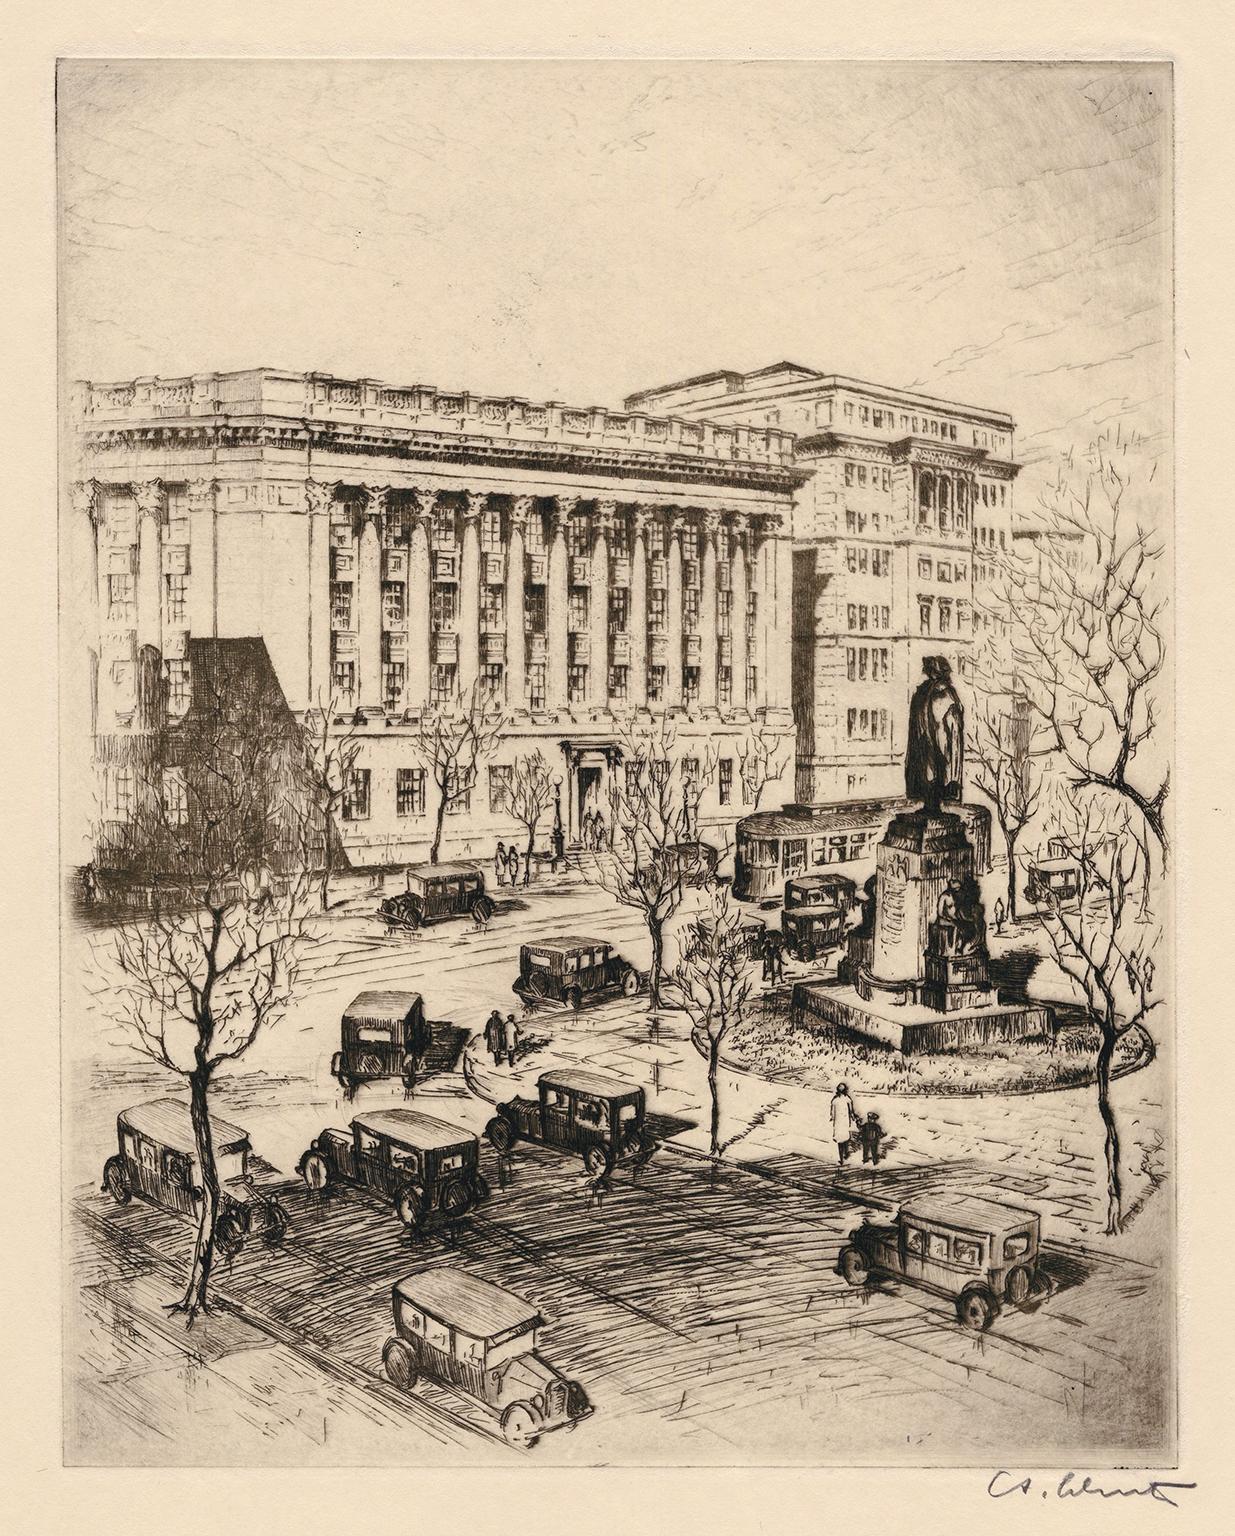 Anton Schutz Landscape Print - 'U.S. Chamber of Commerce' — 1920s Realism, Washington D.C.